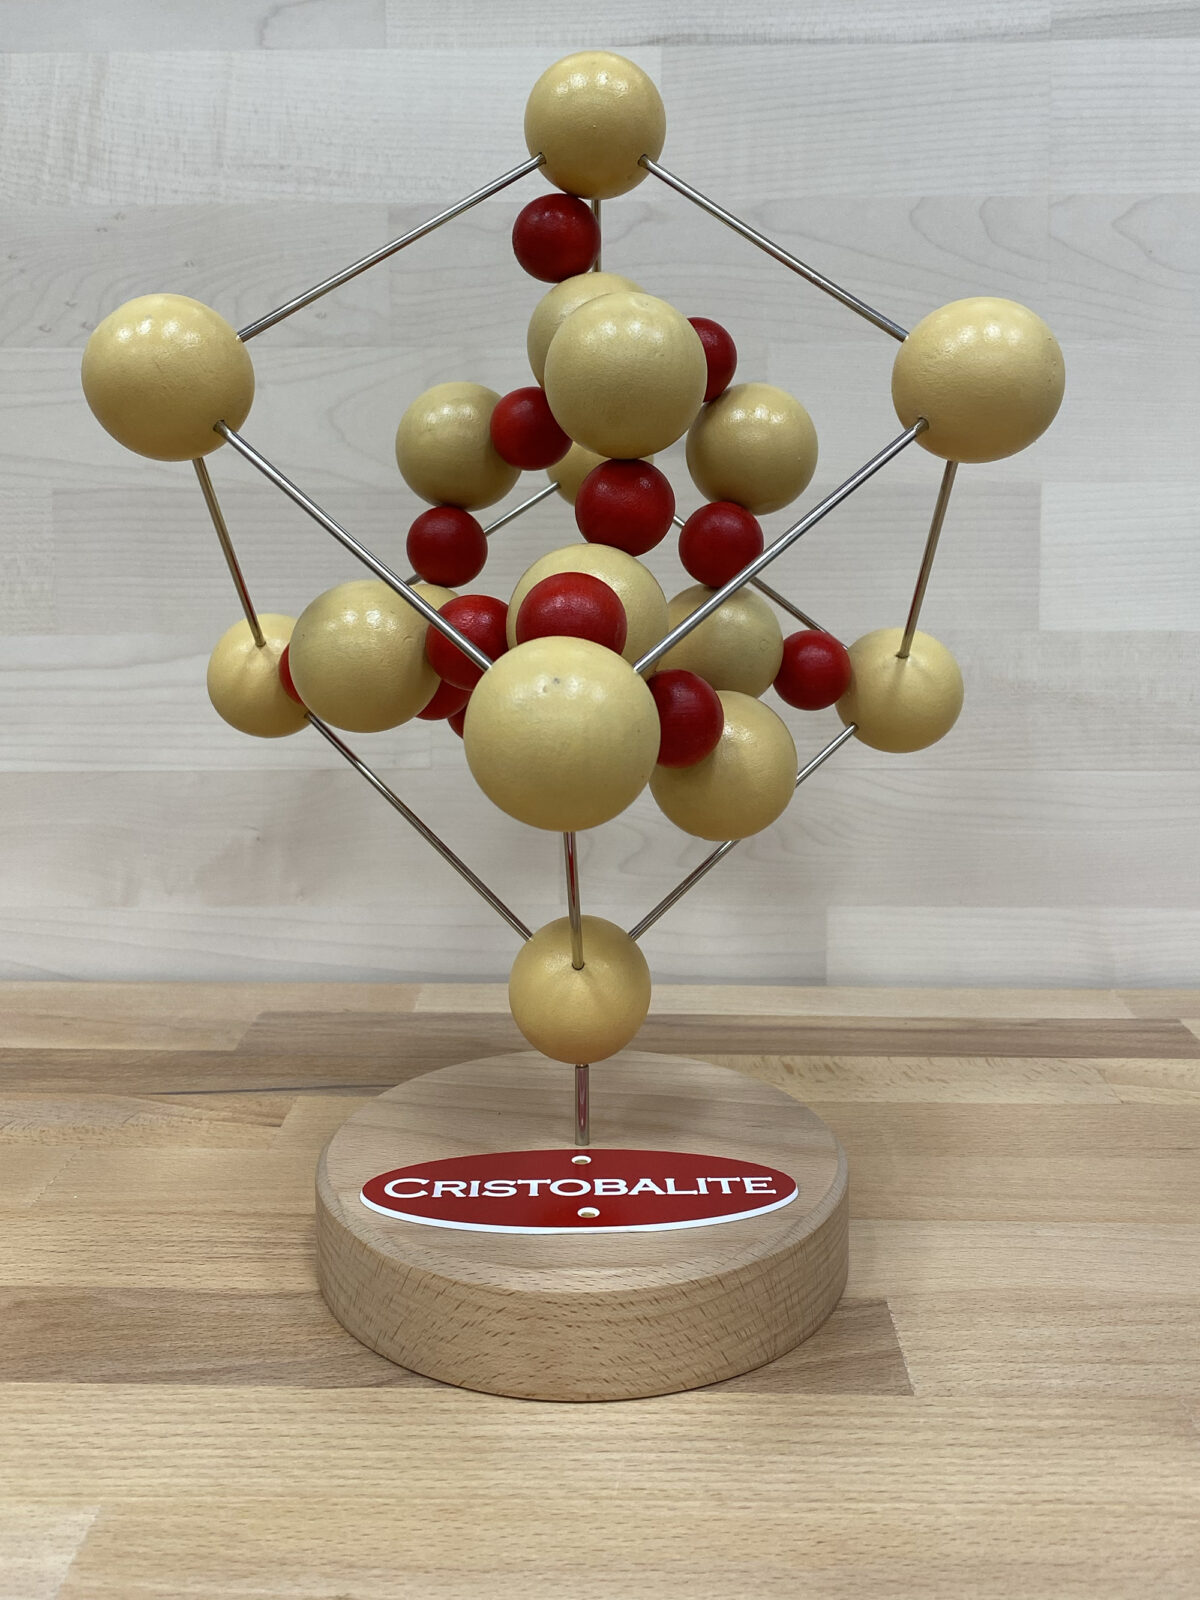 Cristobalite molecule model